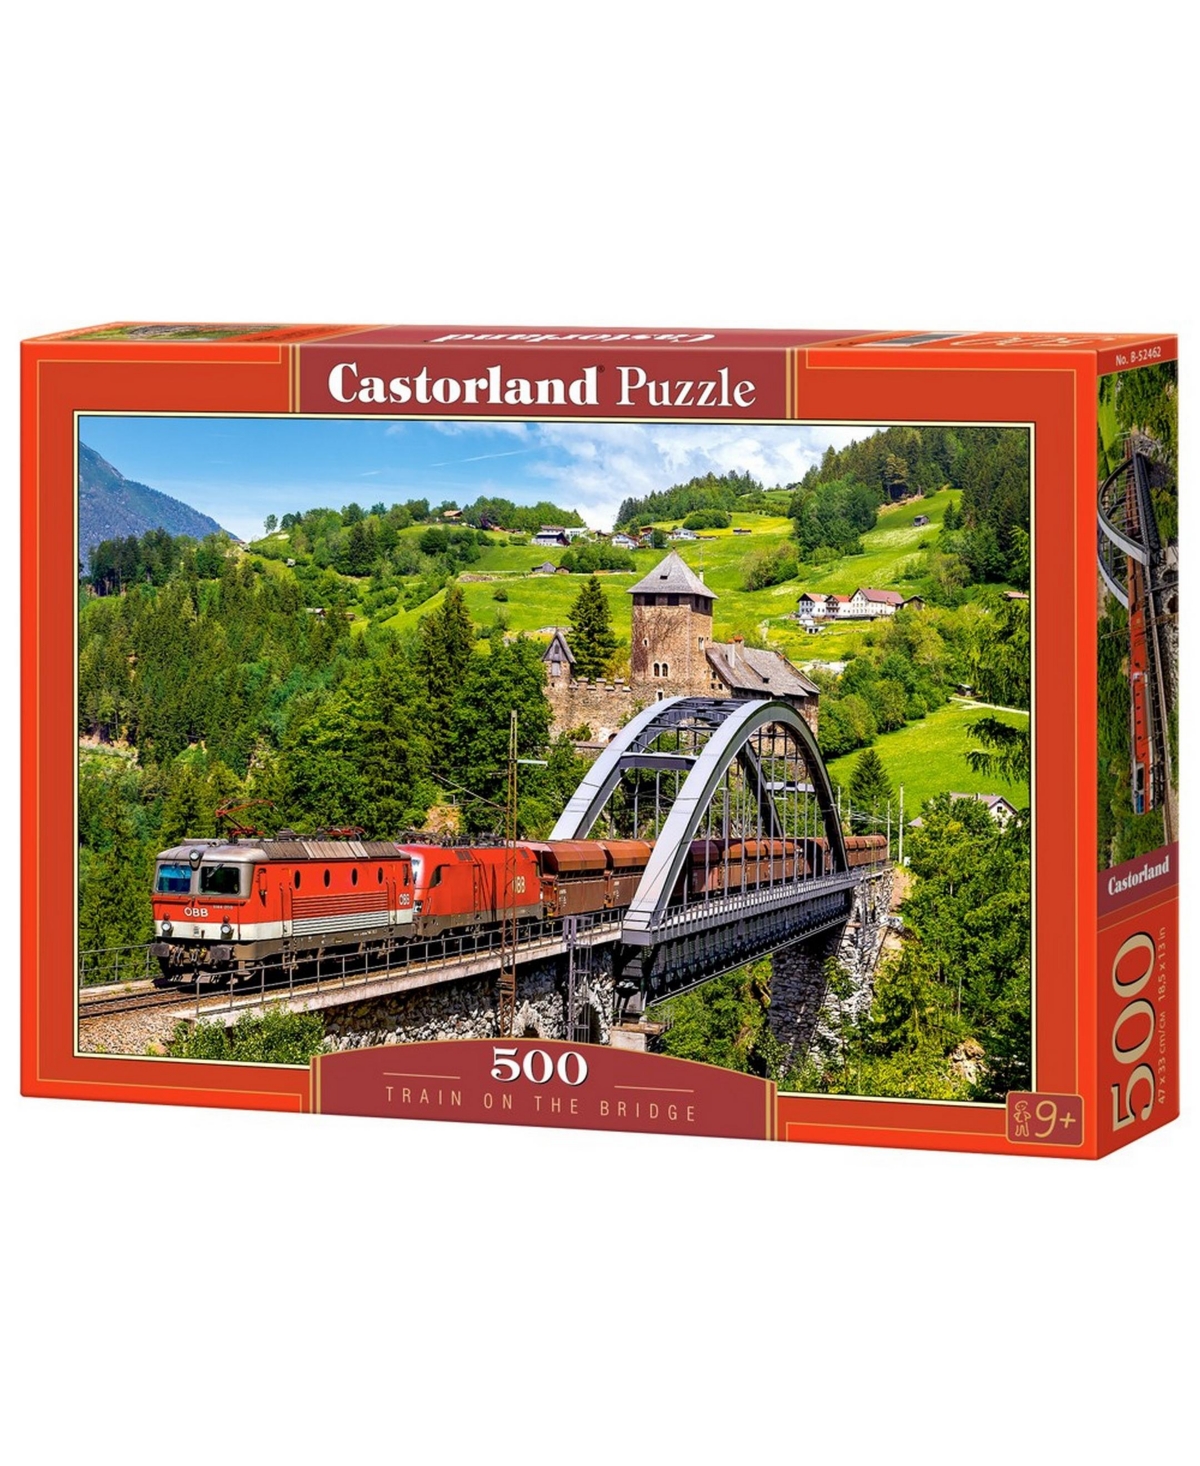 Castorland Train On The Bridge Jigsaw Puzzle Set, 500 Piece In Multicolor